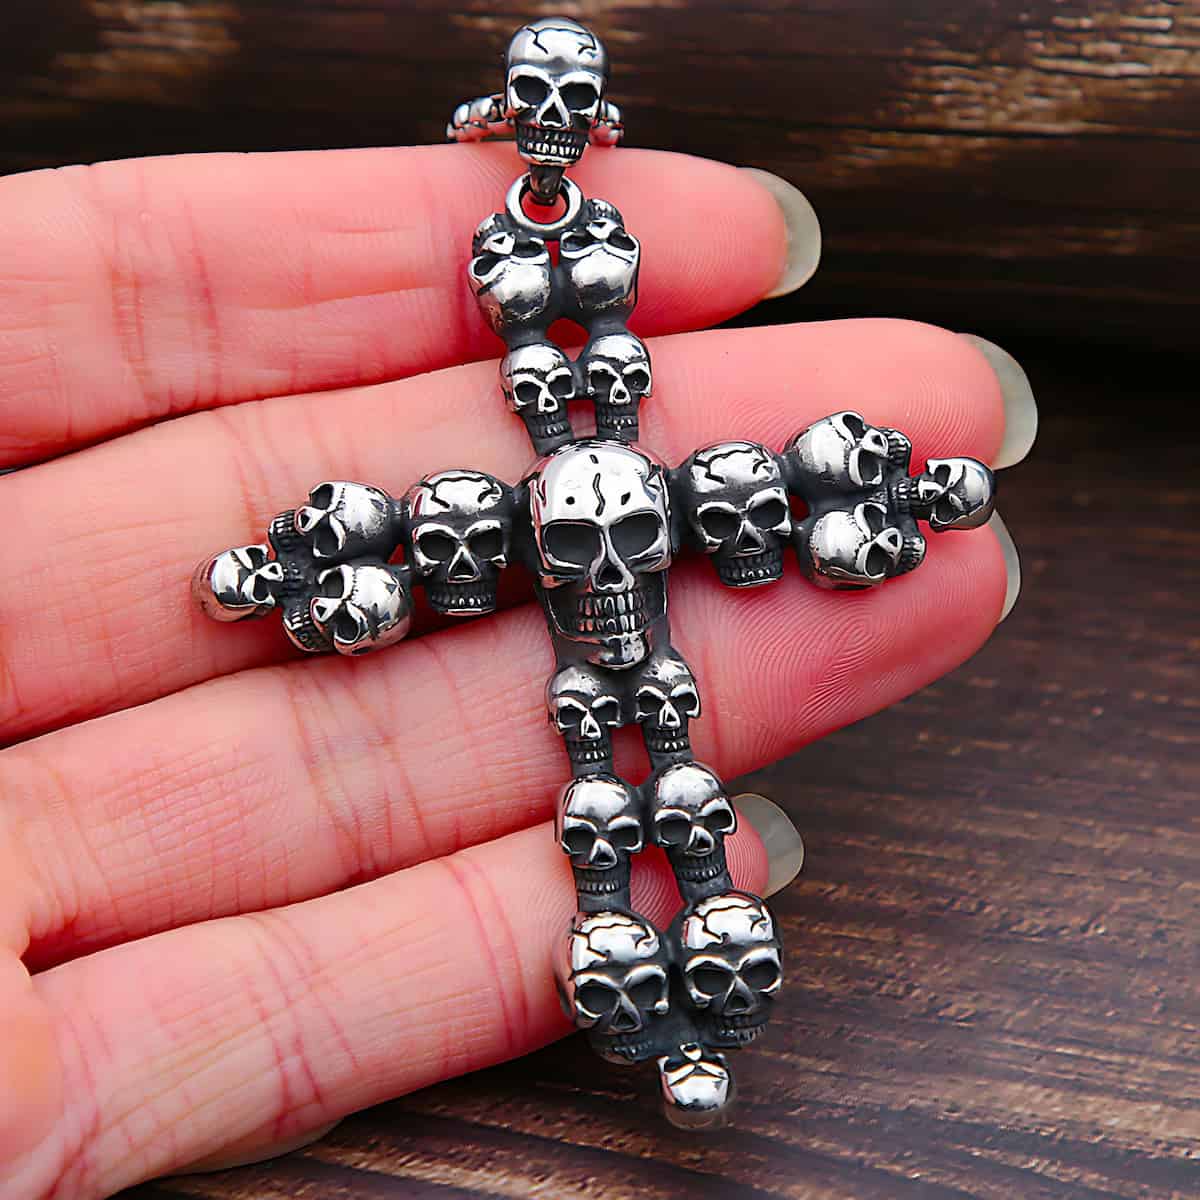 Skull Cross Necklace Xenos Jewelry